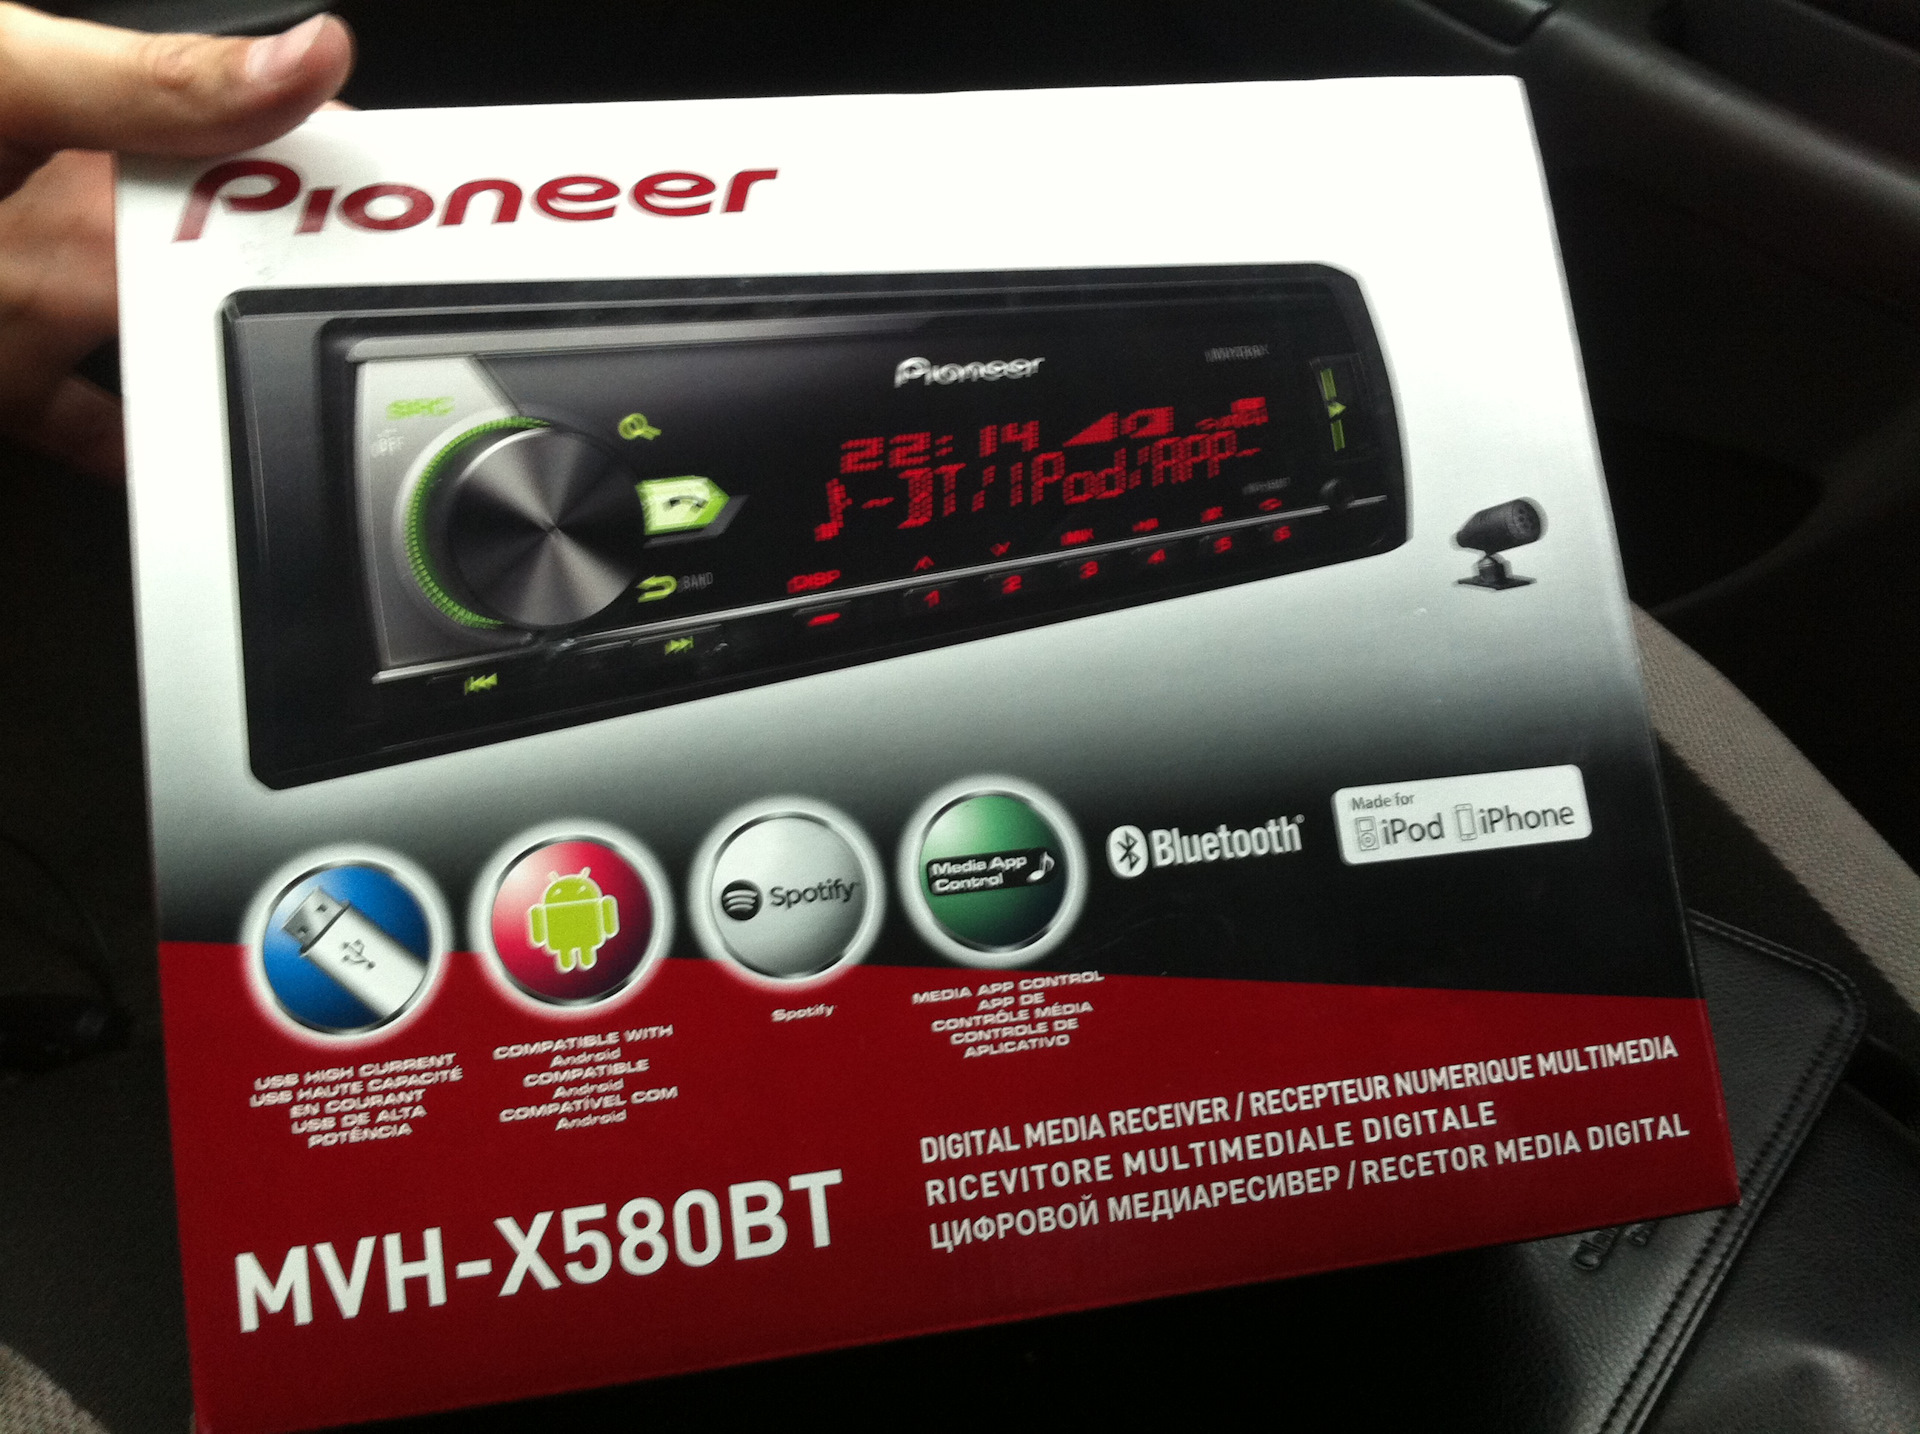 Pioneer mvh s215bt. Pioneer MVH-s580bt. Pioneer MVH x580bt. Pioneer MVH-553p5. MVH-x3610sbt.